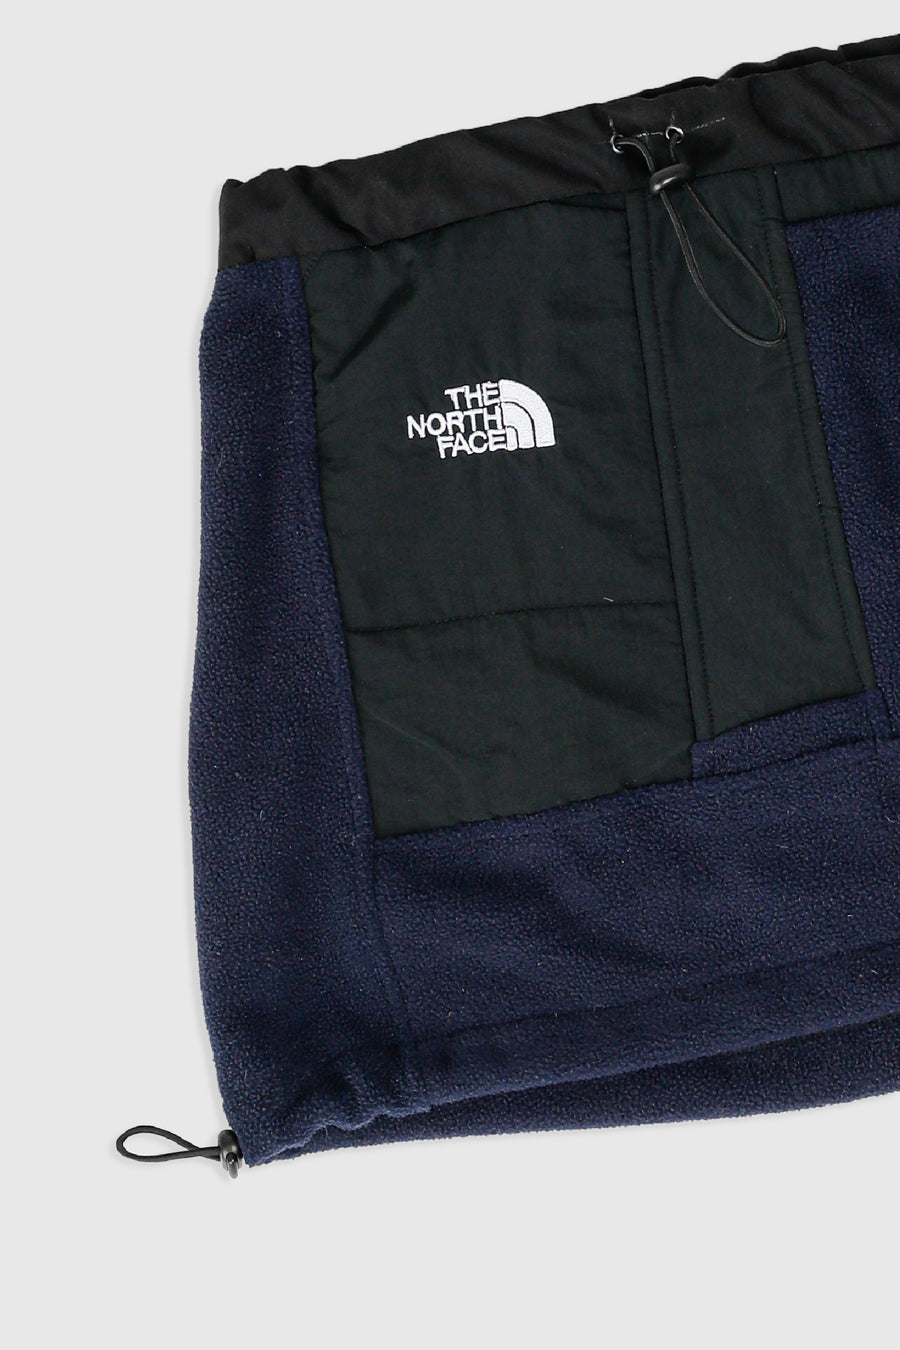 Rework North Face Fleece Mini Skirt - XS, S, M, L